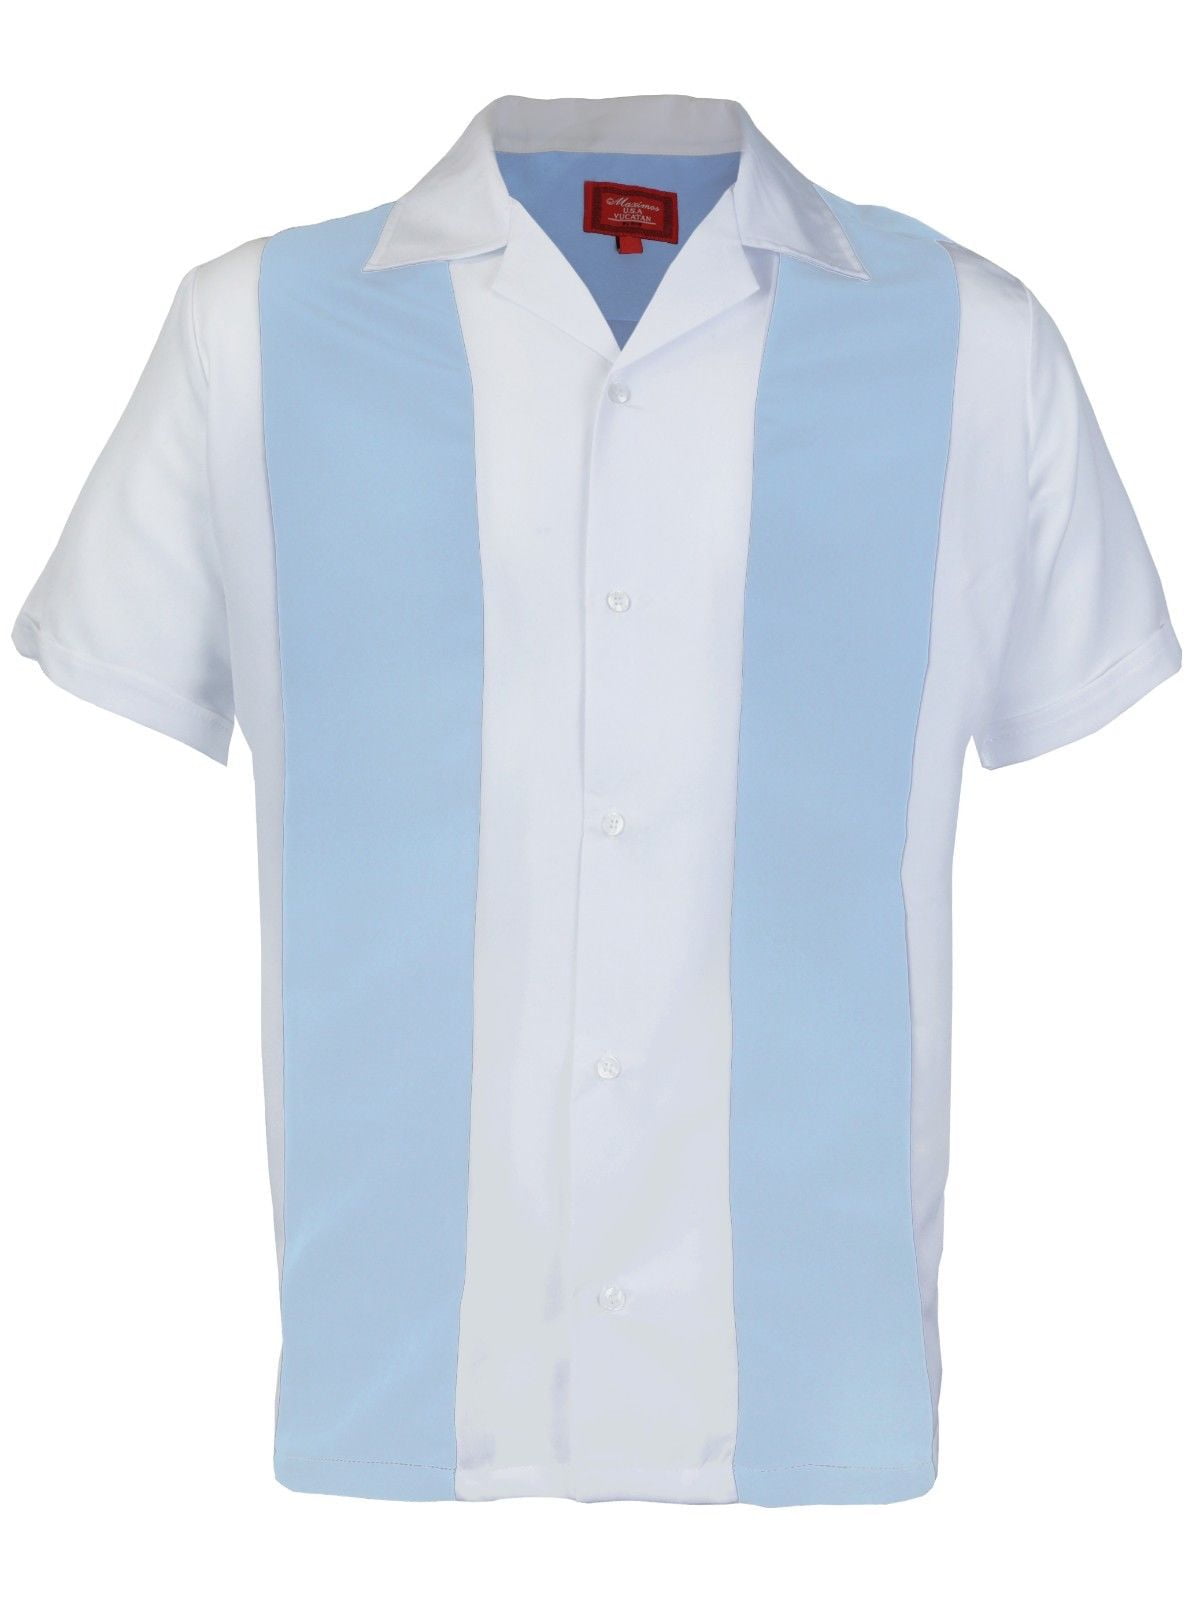 Maximos - Men's Two Tone Bowling Casual Dress Shirt (Light Blue / White